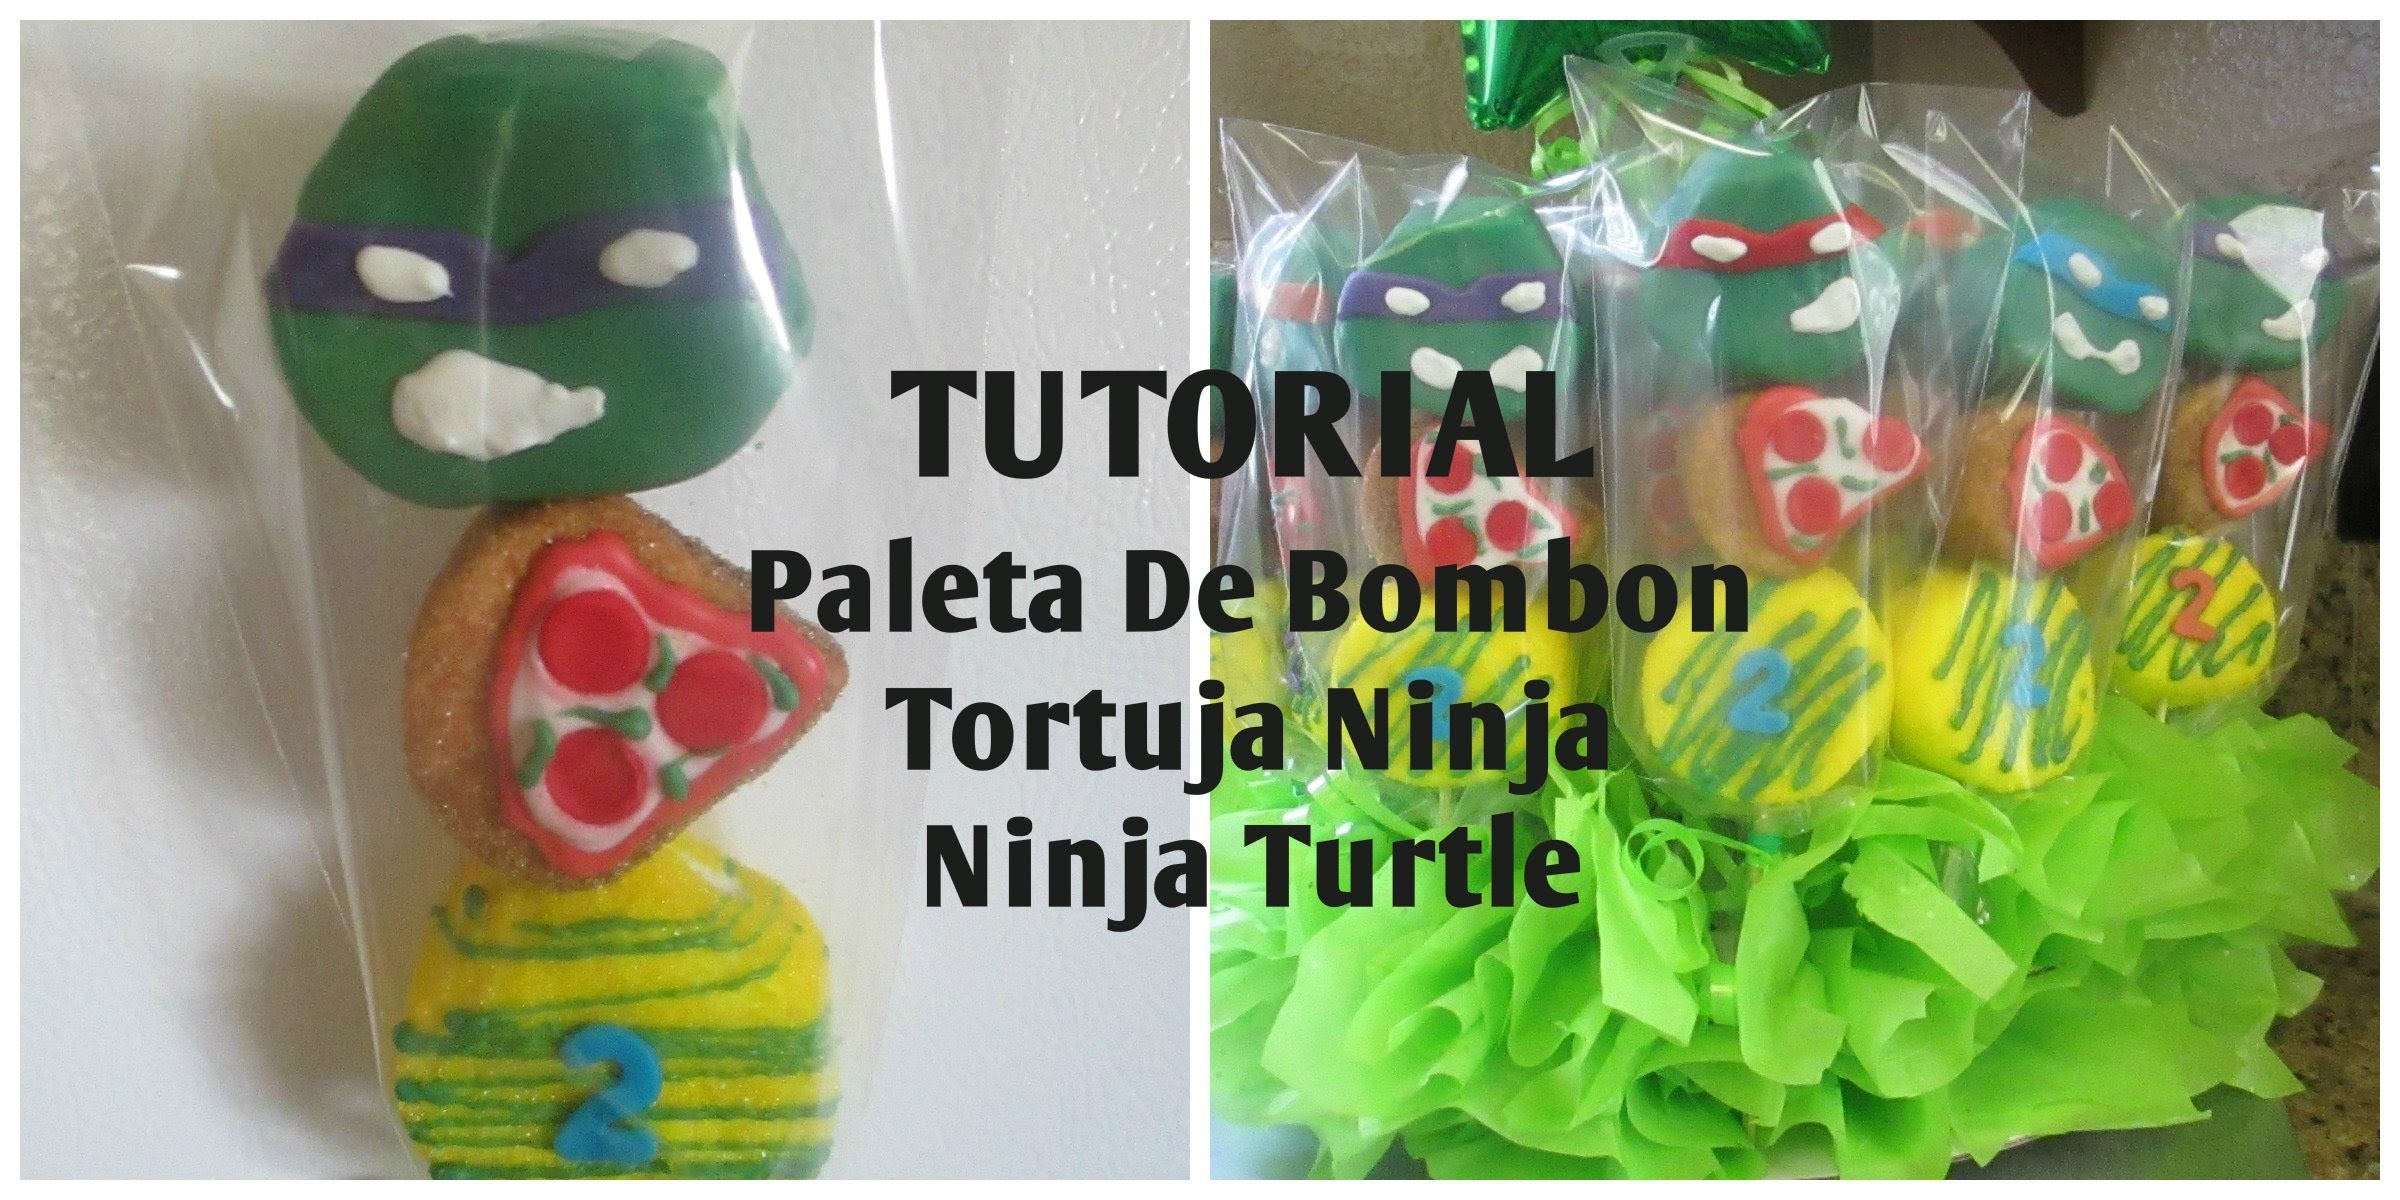 Tutorial Paletas De Bombon Tortugas Ninja.Ninja Turtles - Madelin's Cakes